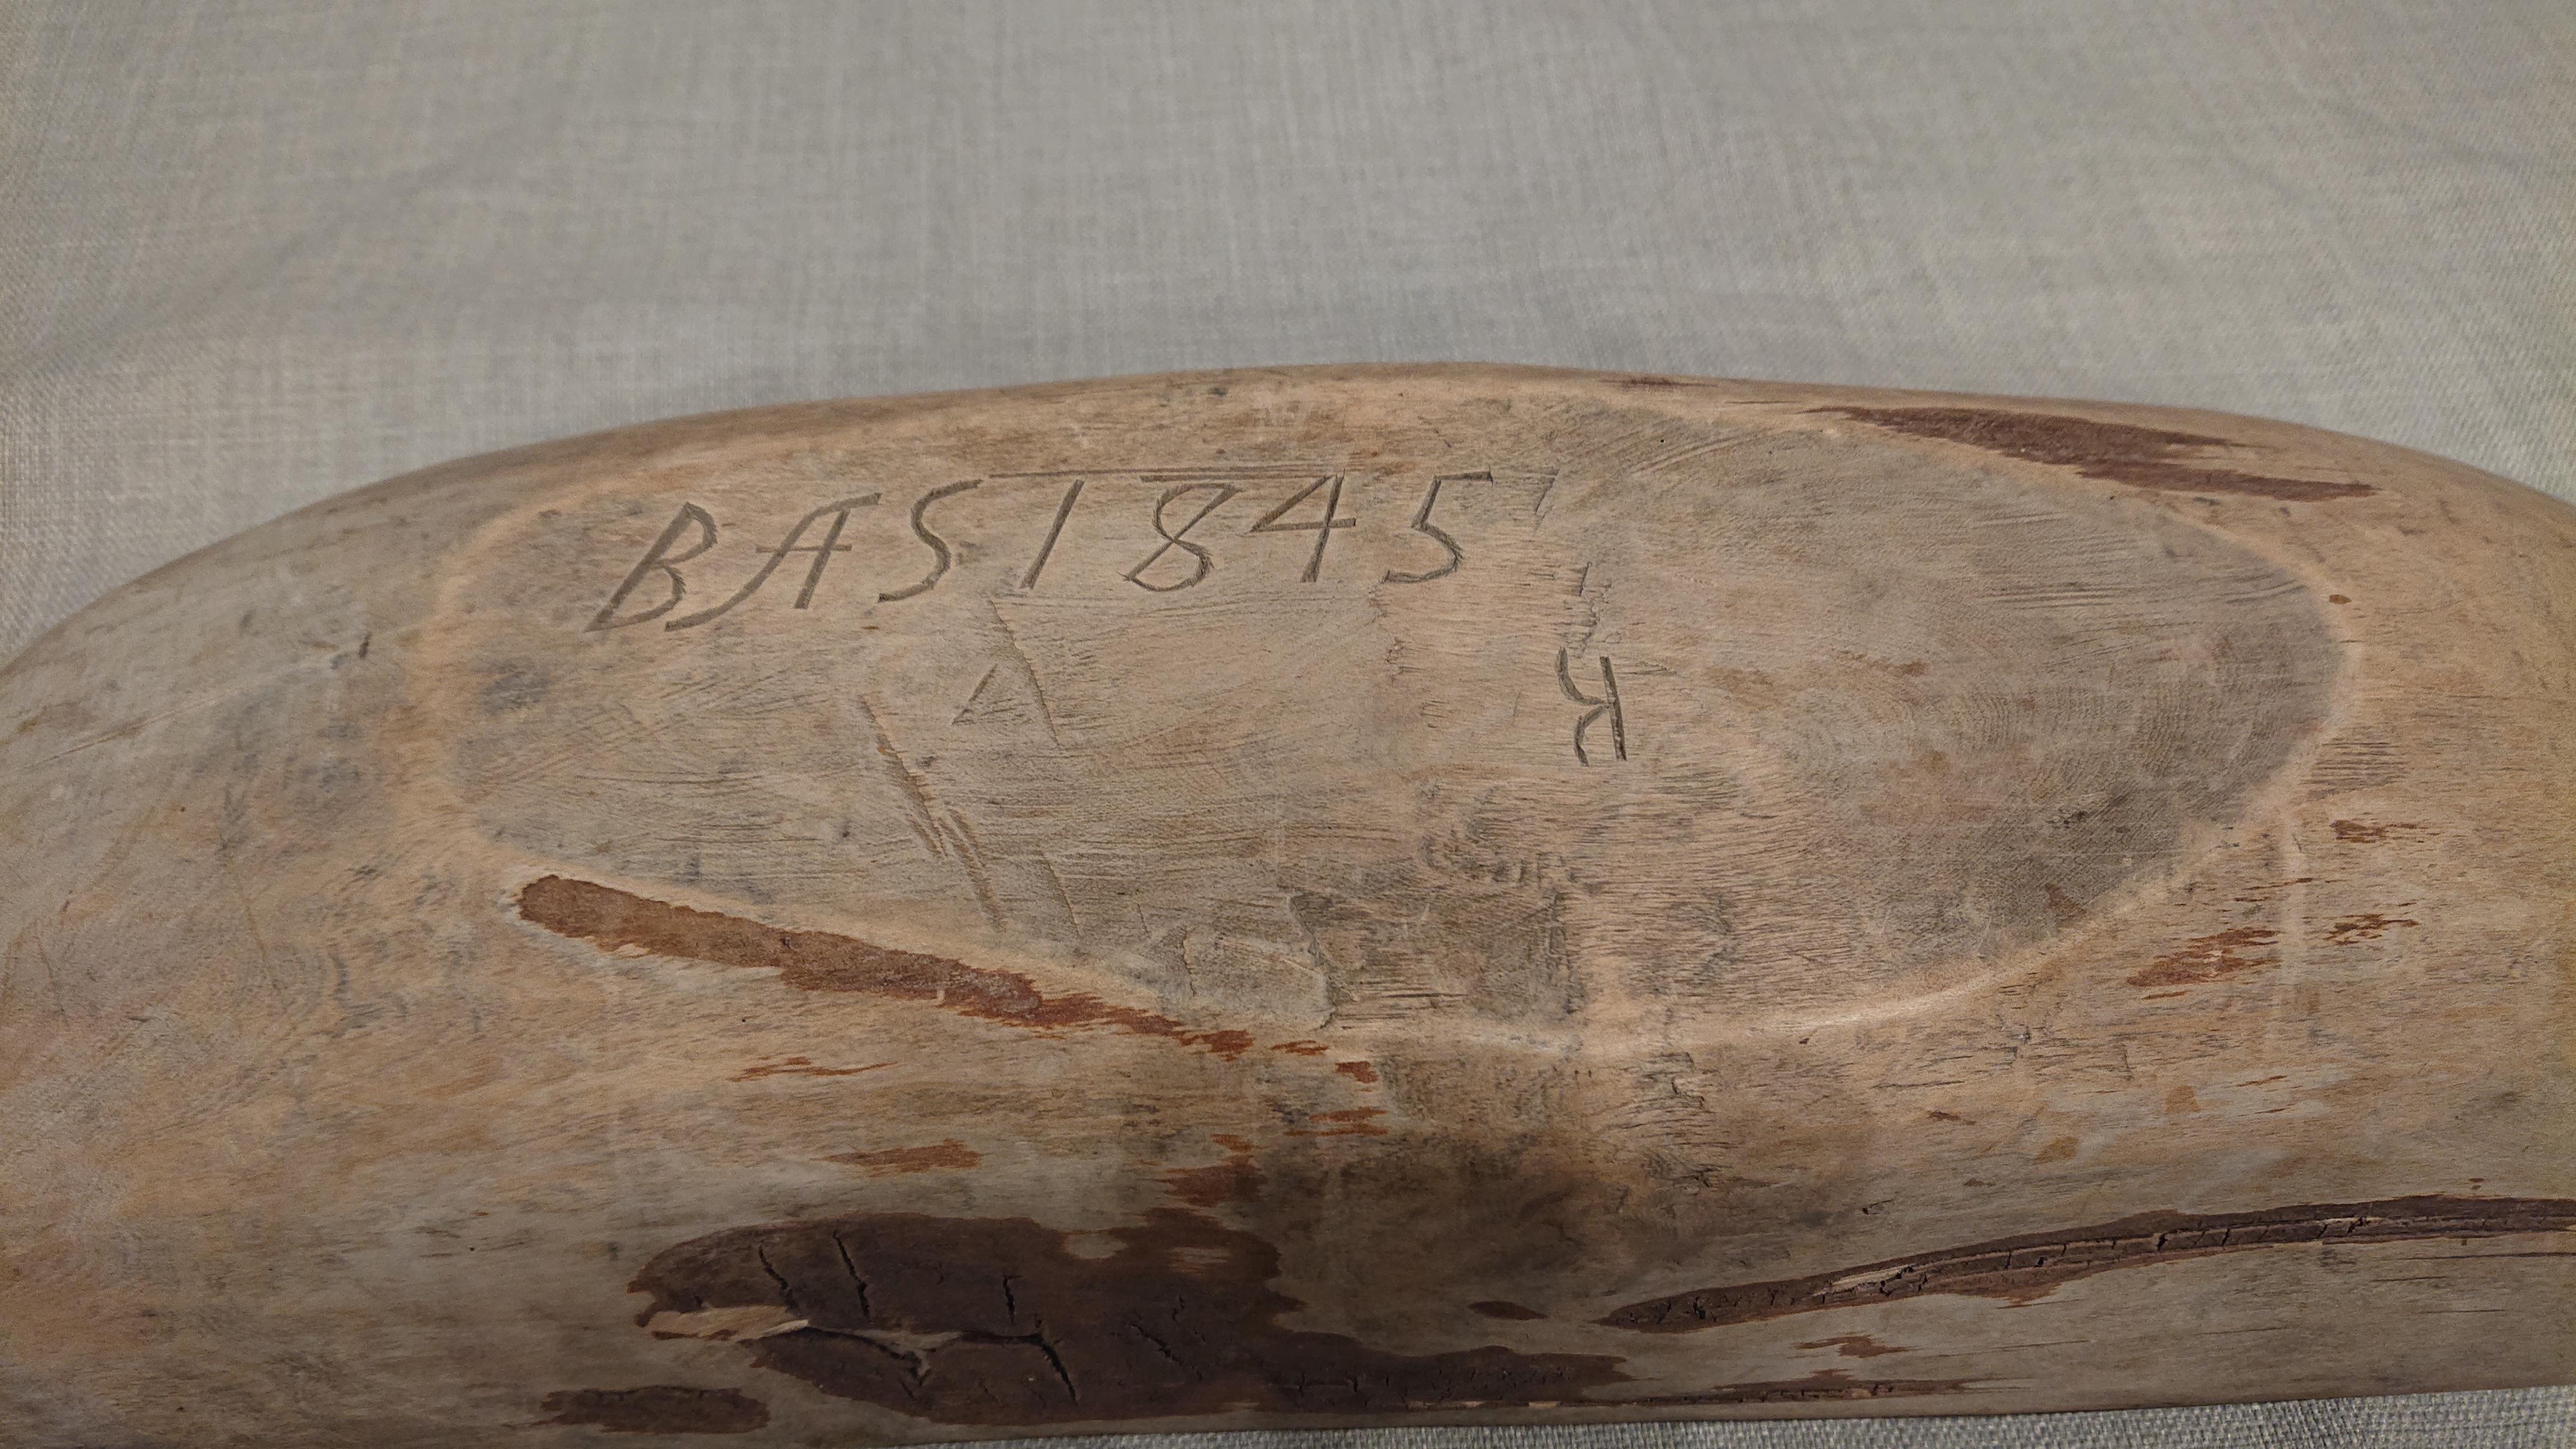 19th Century Swedish Folk Art Wooden Bowl Signed BAS, 1845 For Sale 4